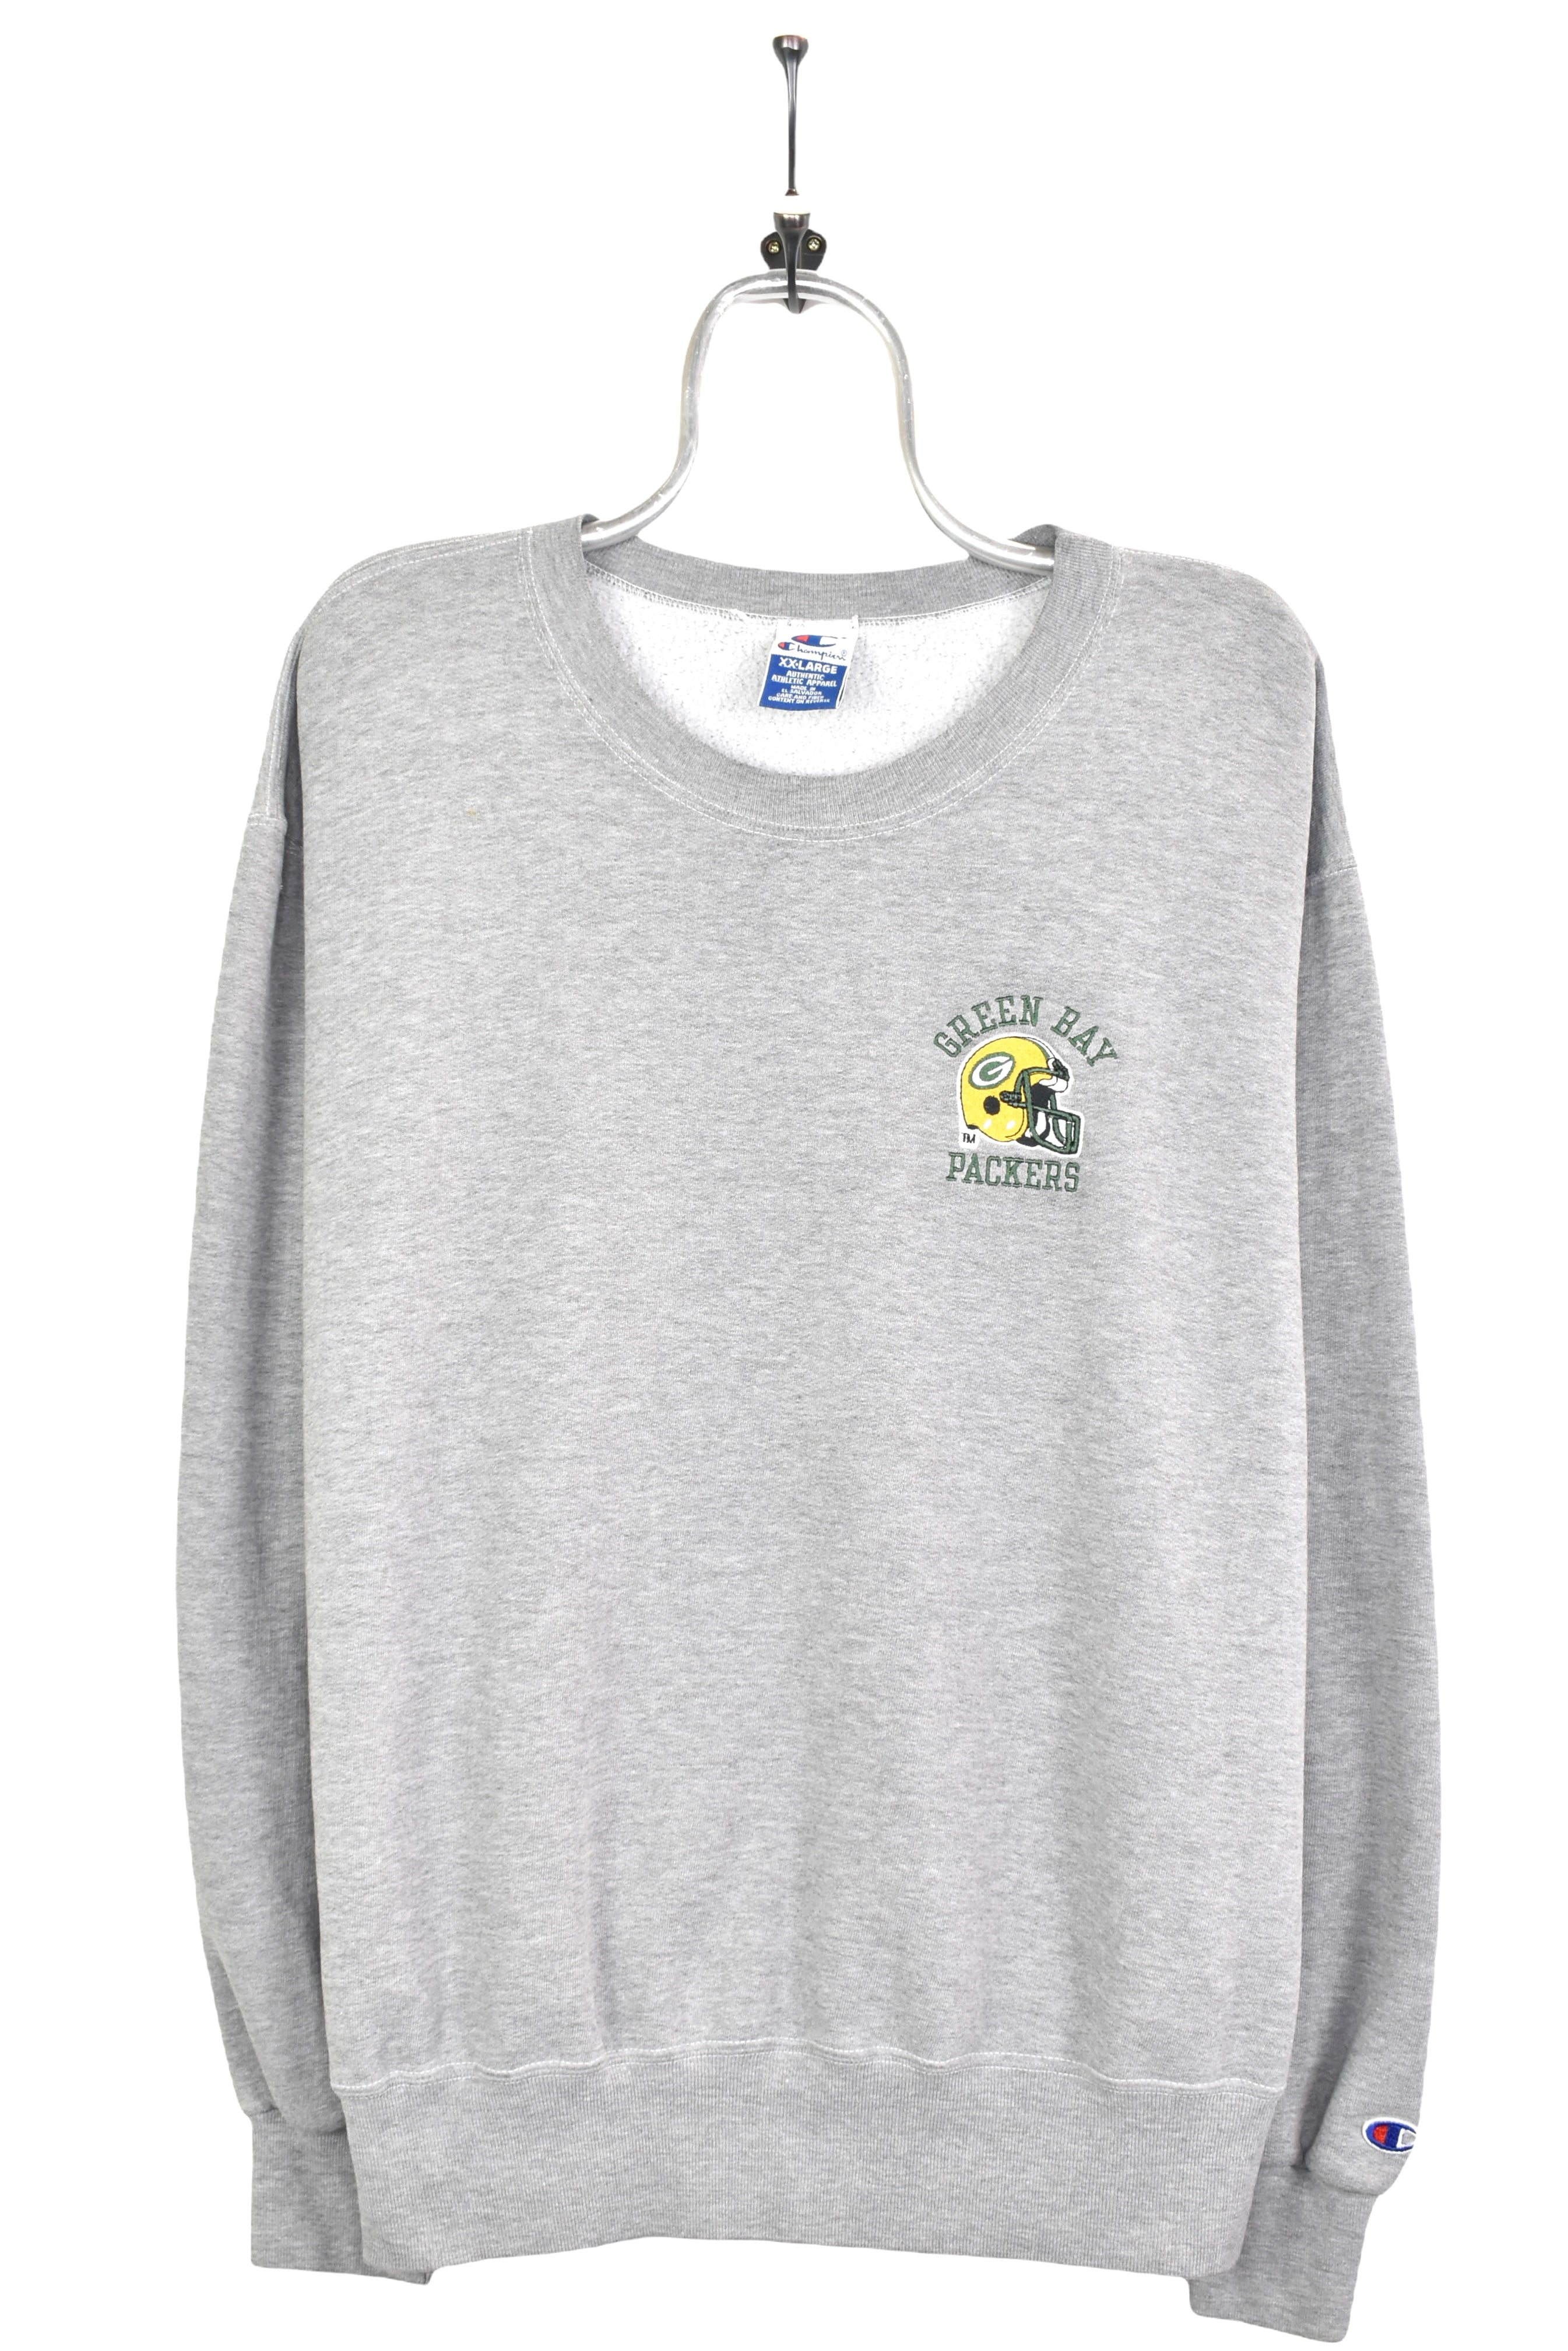 Vintage Green Bay Packers sweatshirt, NFL embroidered crewneck